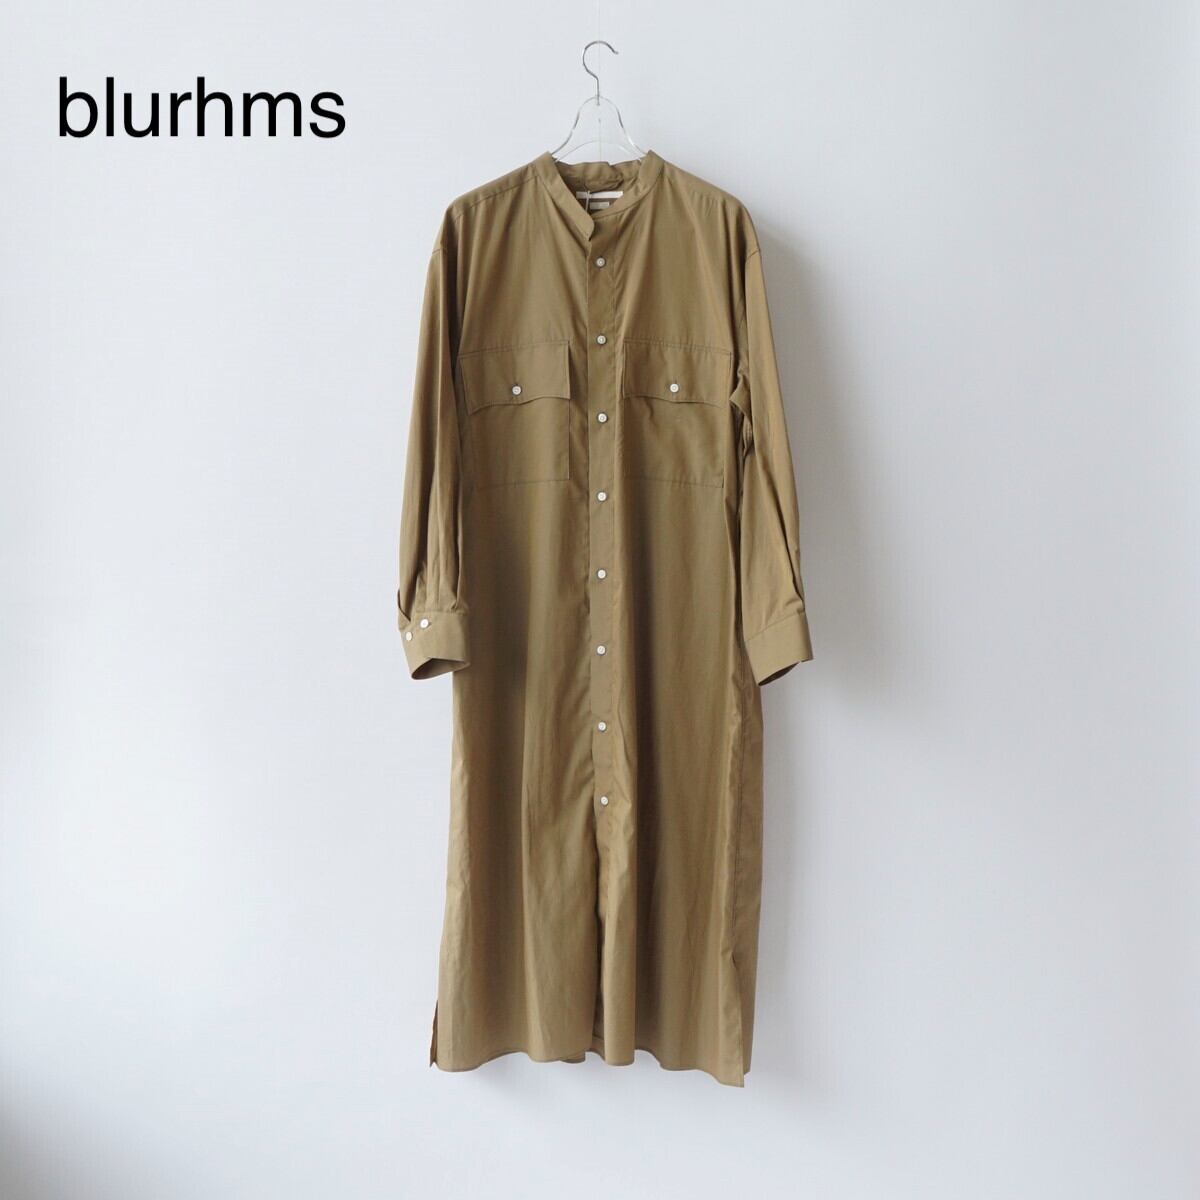 blurhms/ブラームス・ Chambray Officer Dress